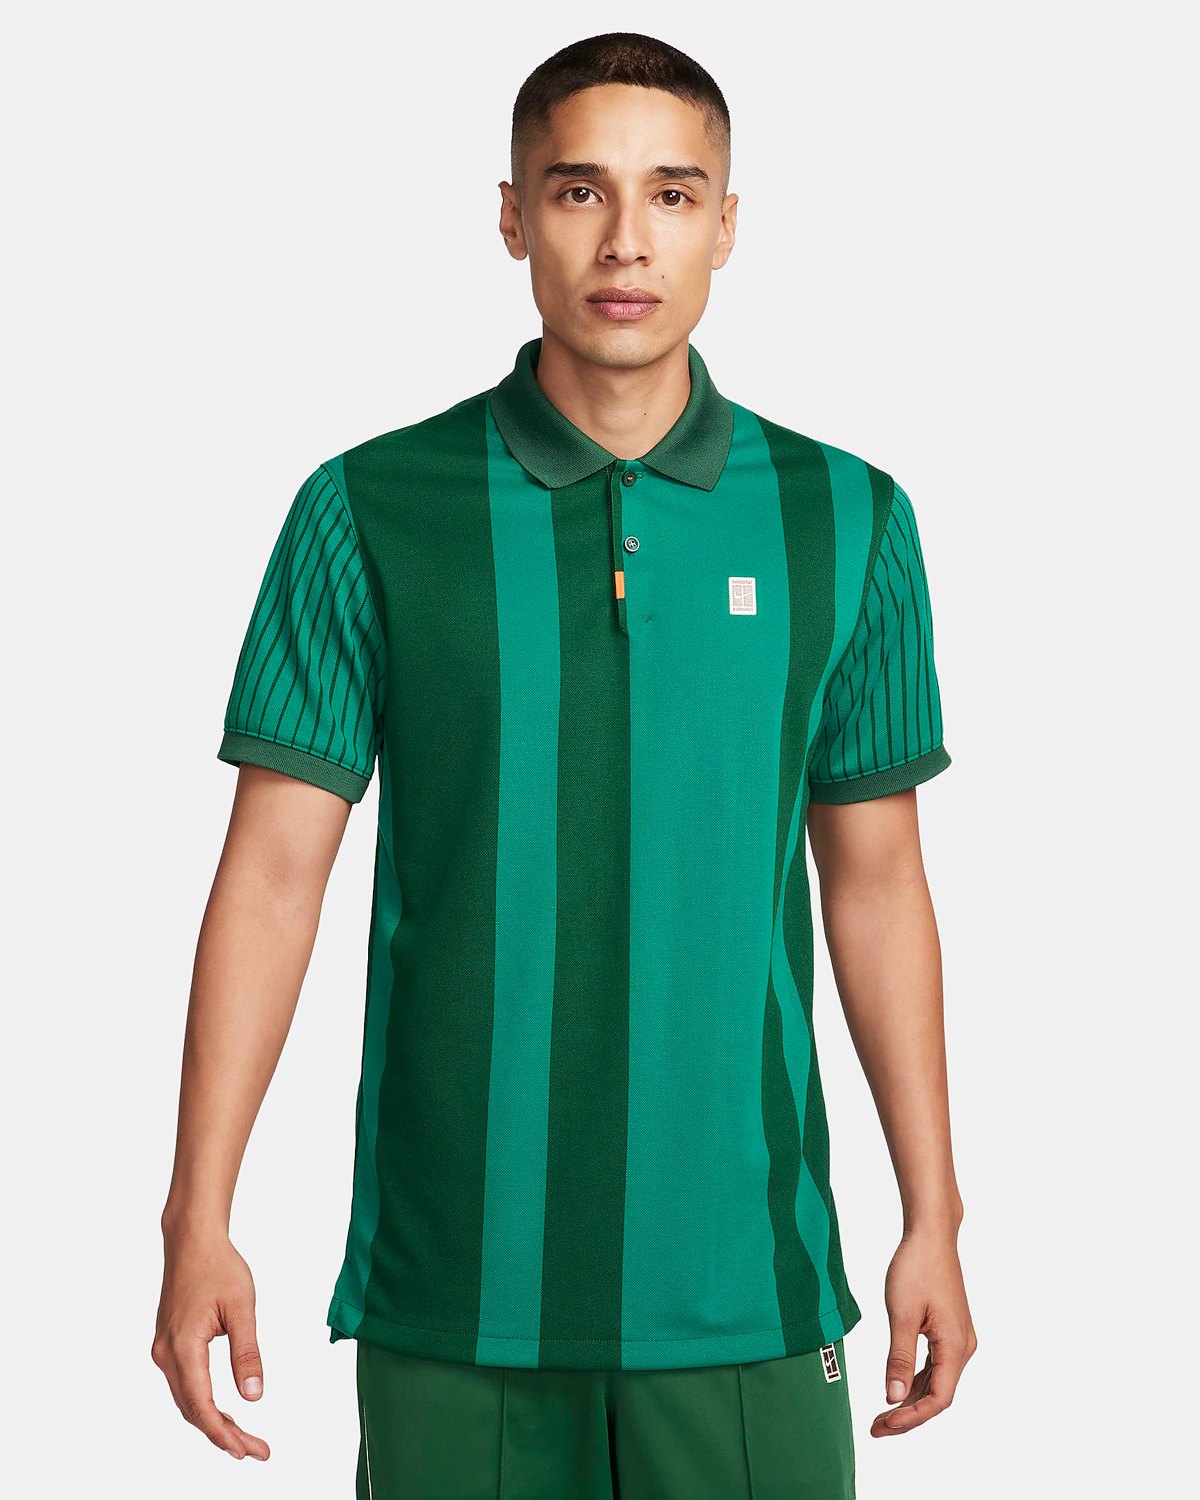 Nike-Polo-Shirt-Malachite-Green